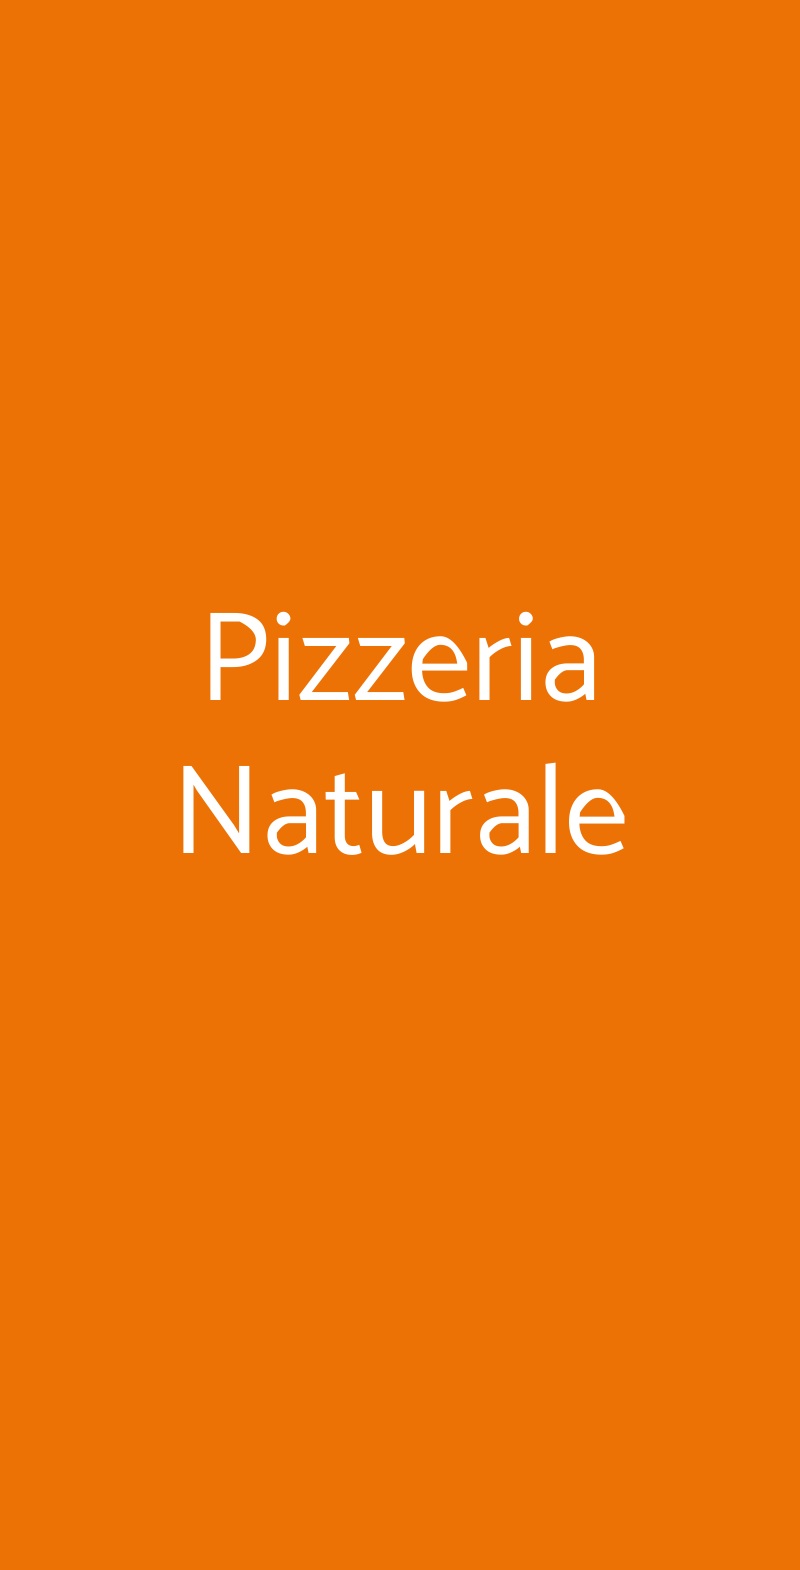 Pizzeria Naturale Milano menù 1 pagina